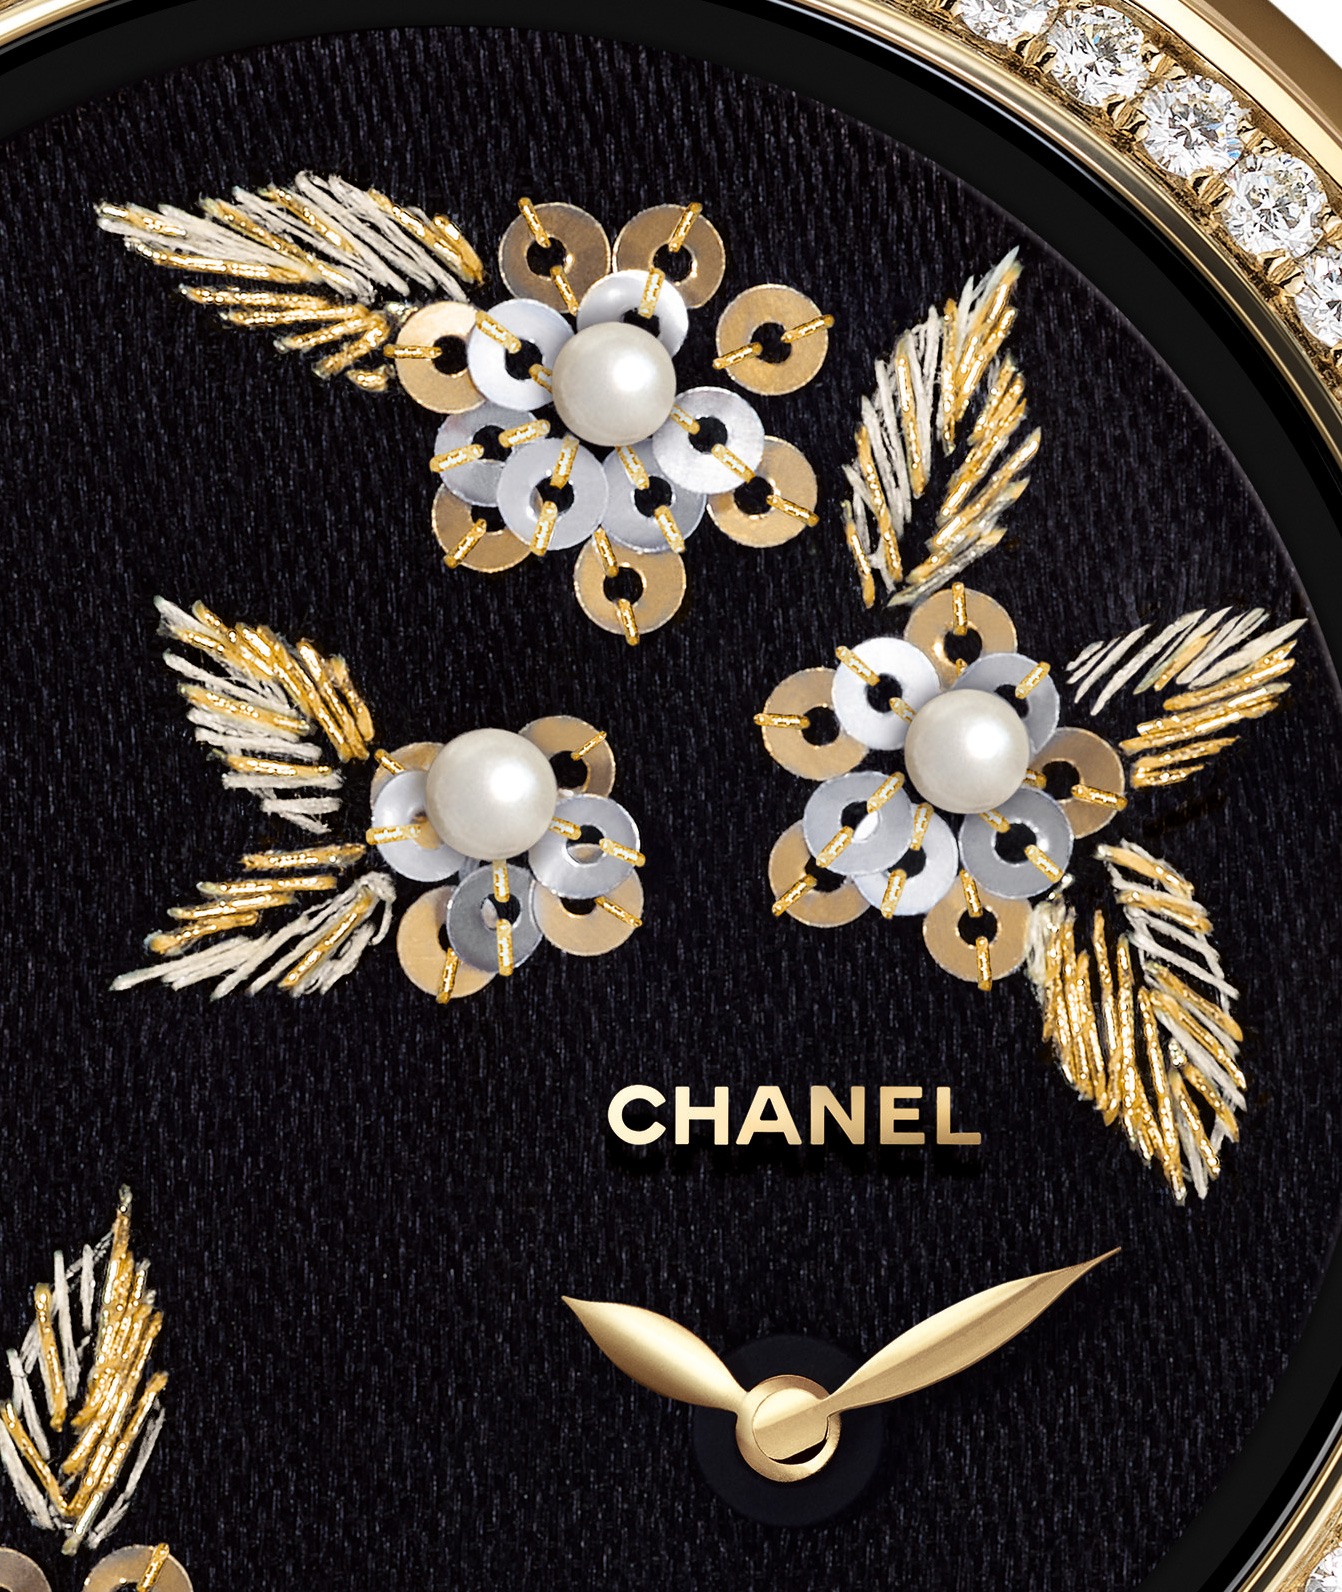 Chanel logo embroidery design